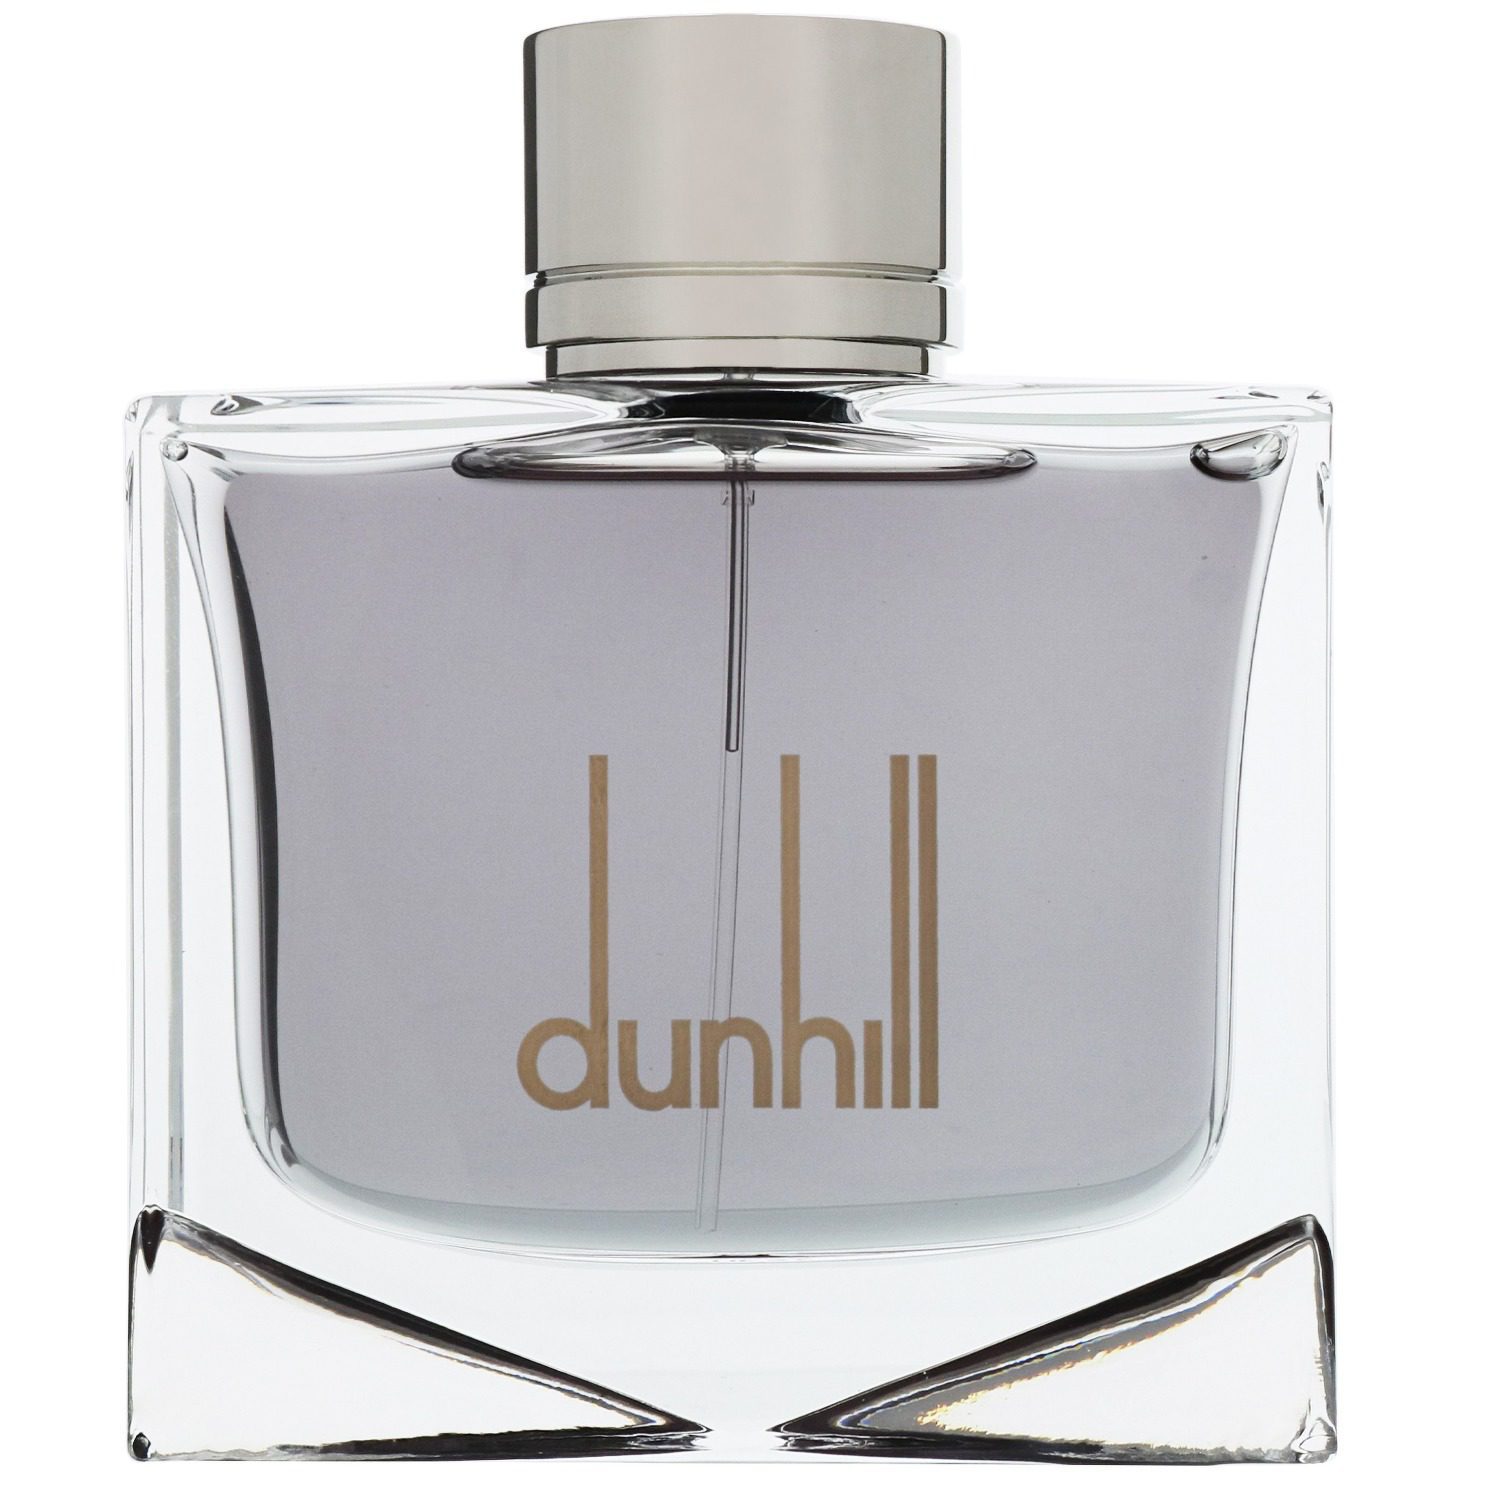 Dunhill Black for Men - VPerfumes